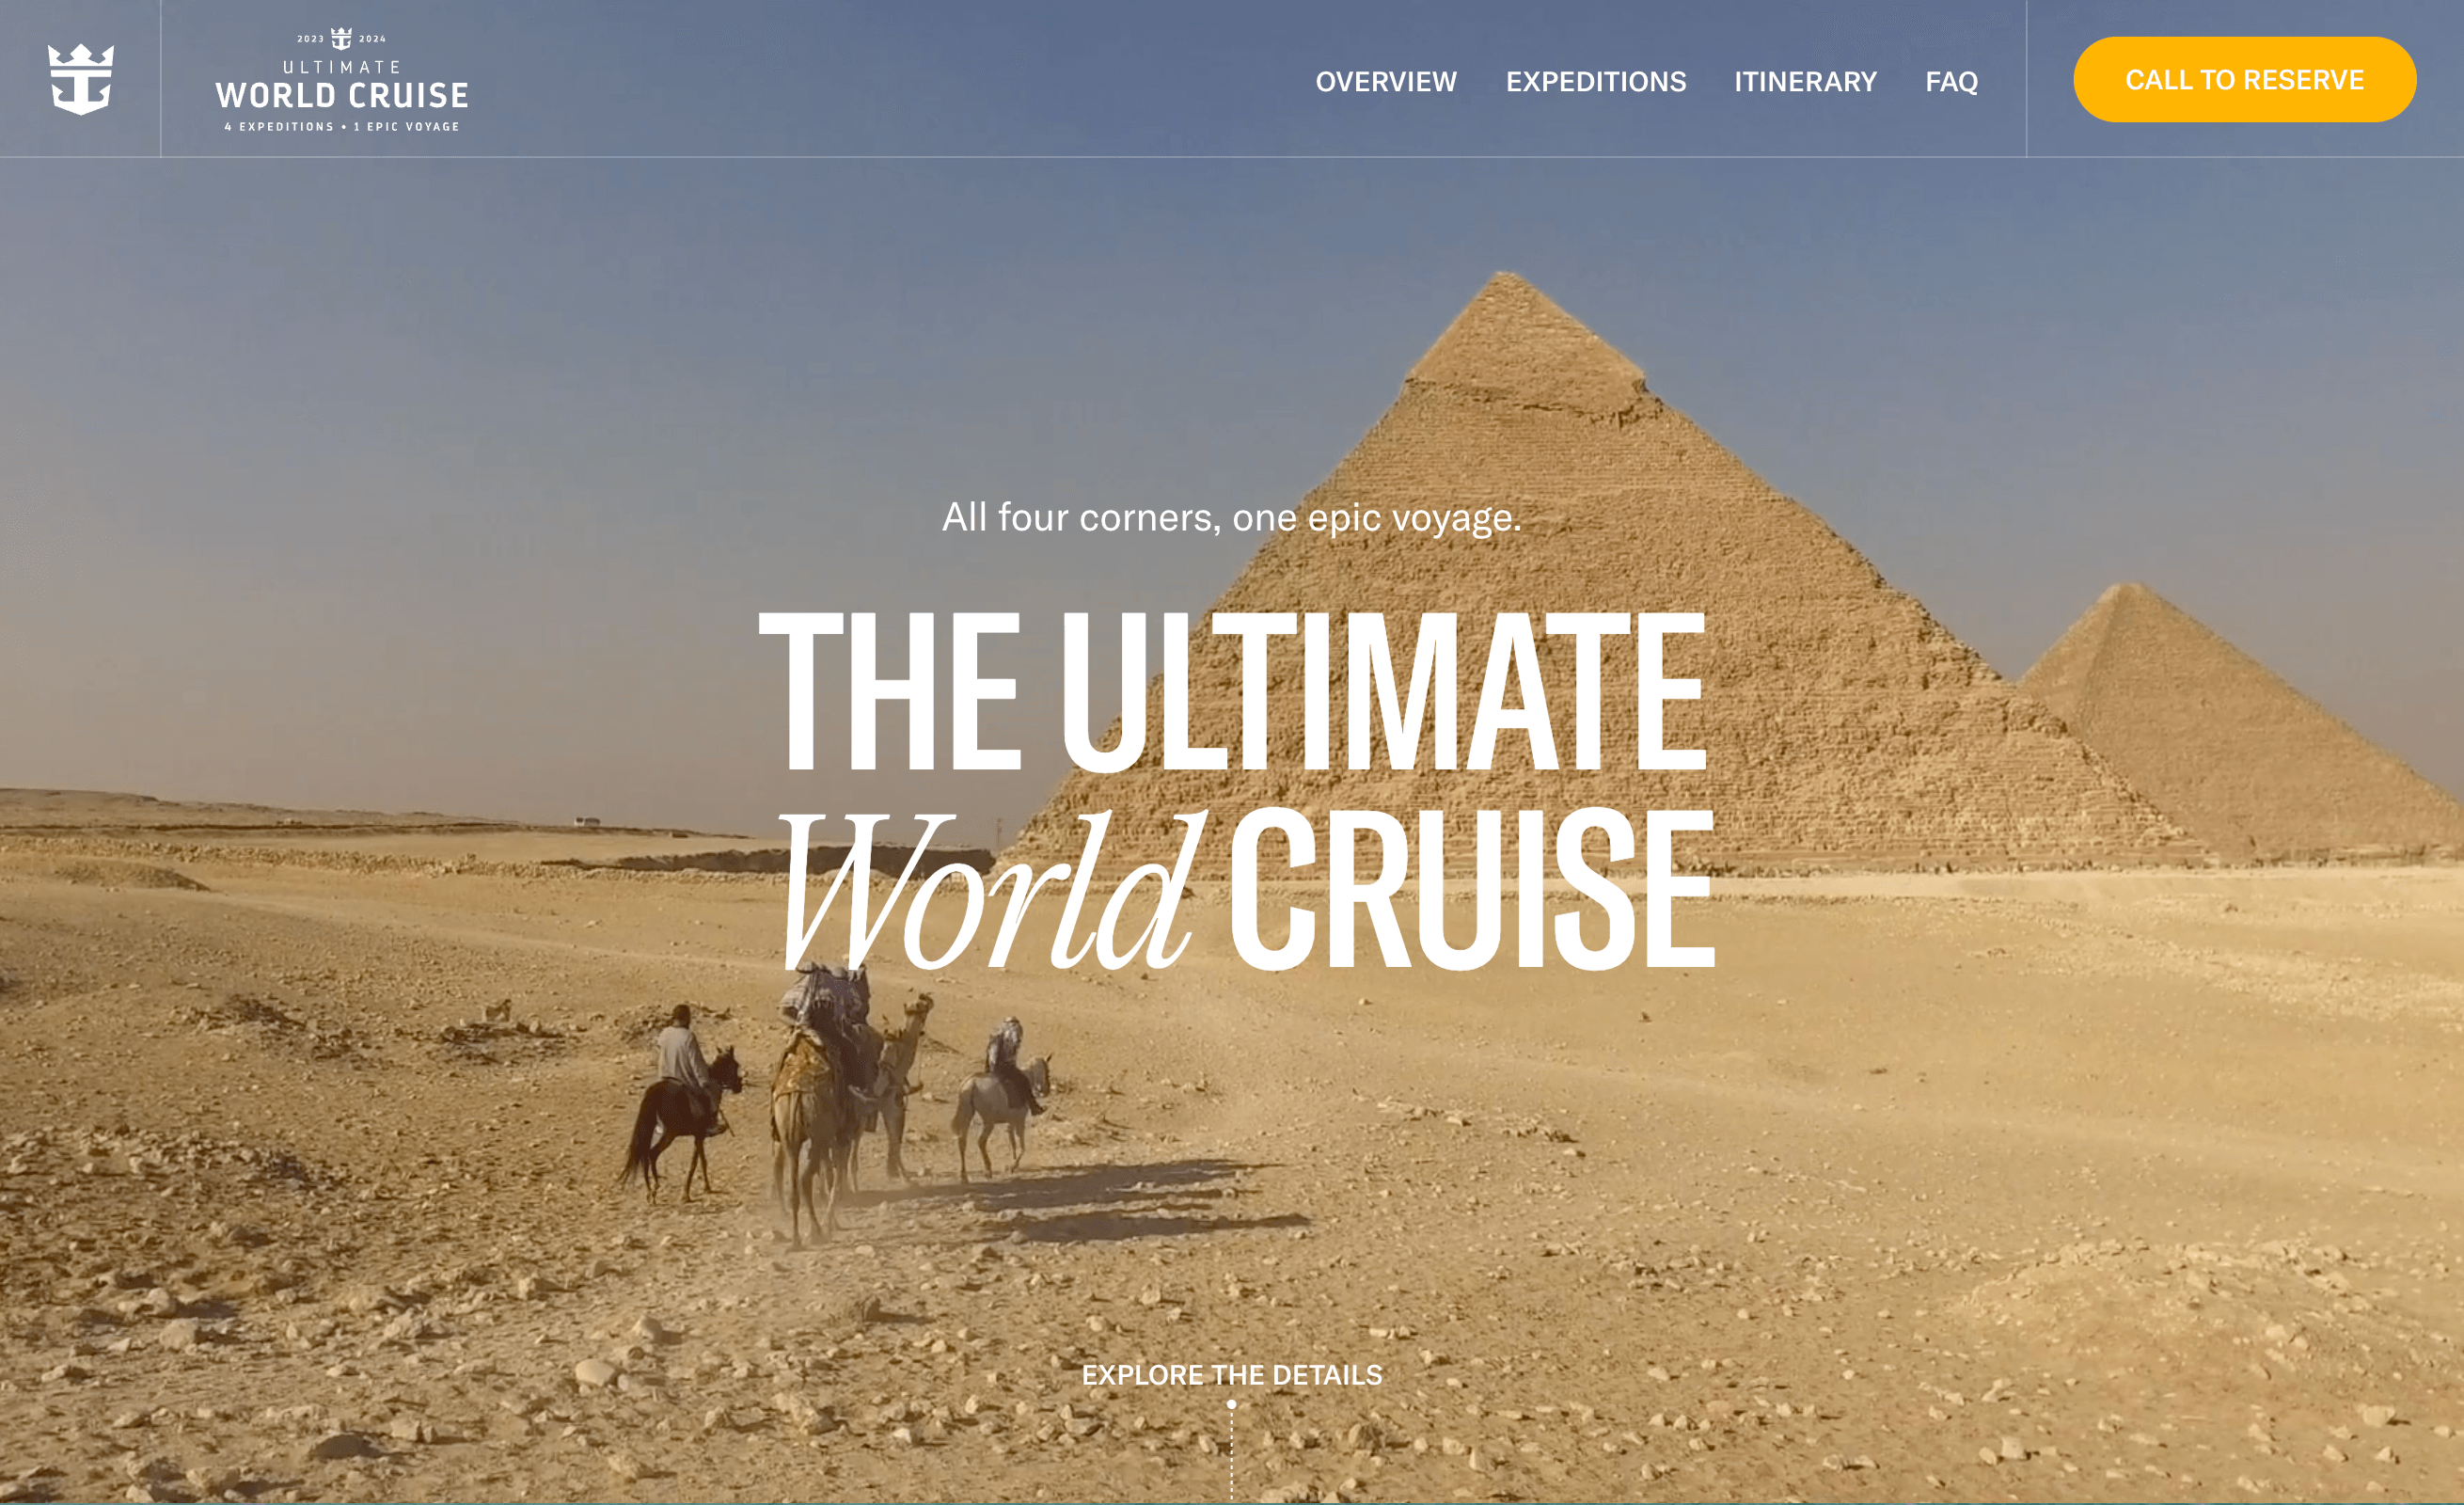 The Ultimate World Cruise | Royal Caribbean Cruises